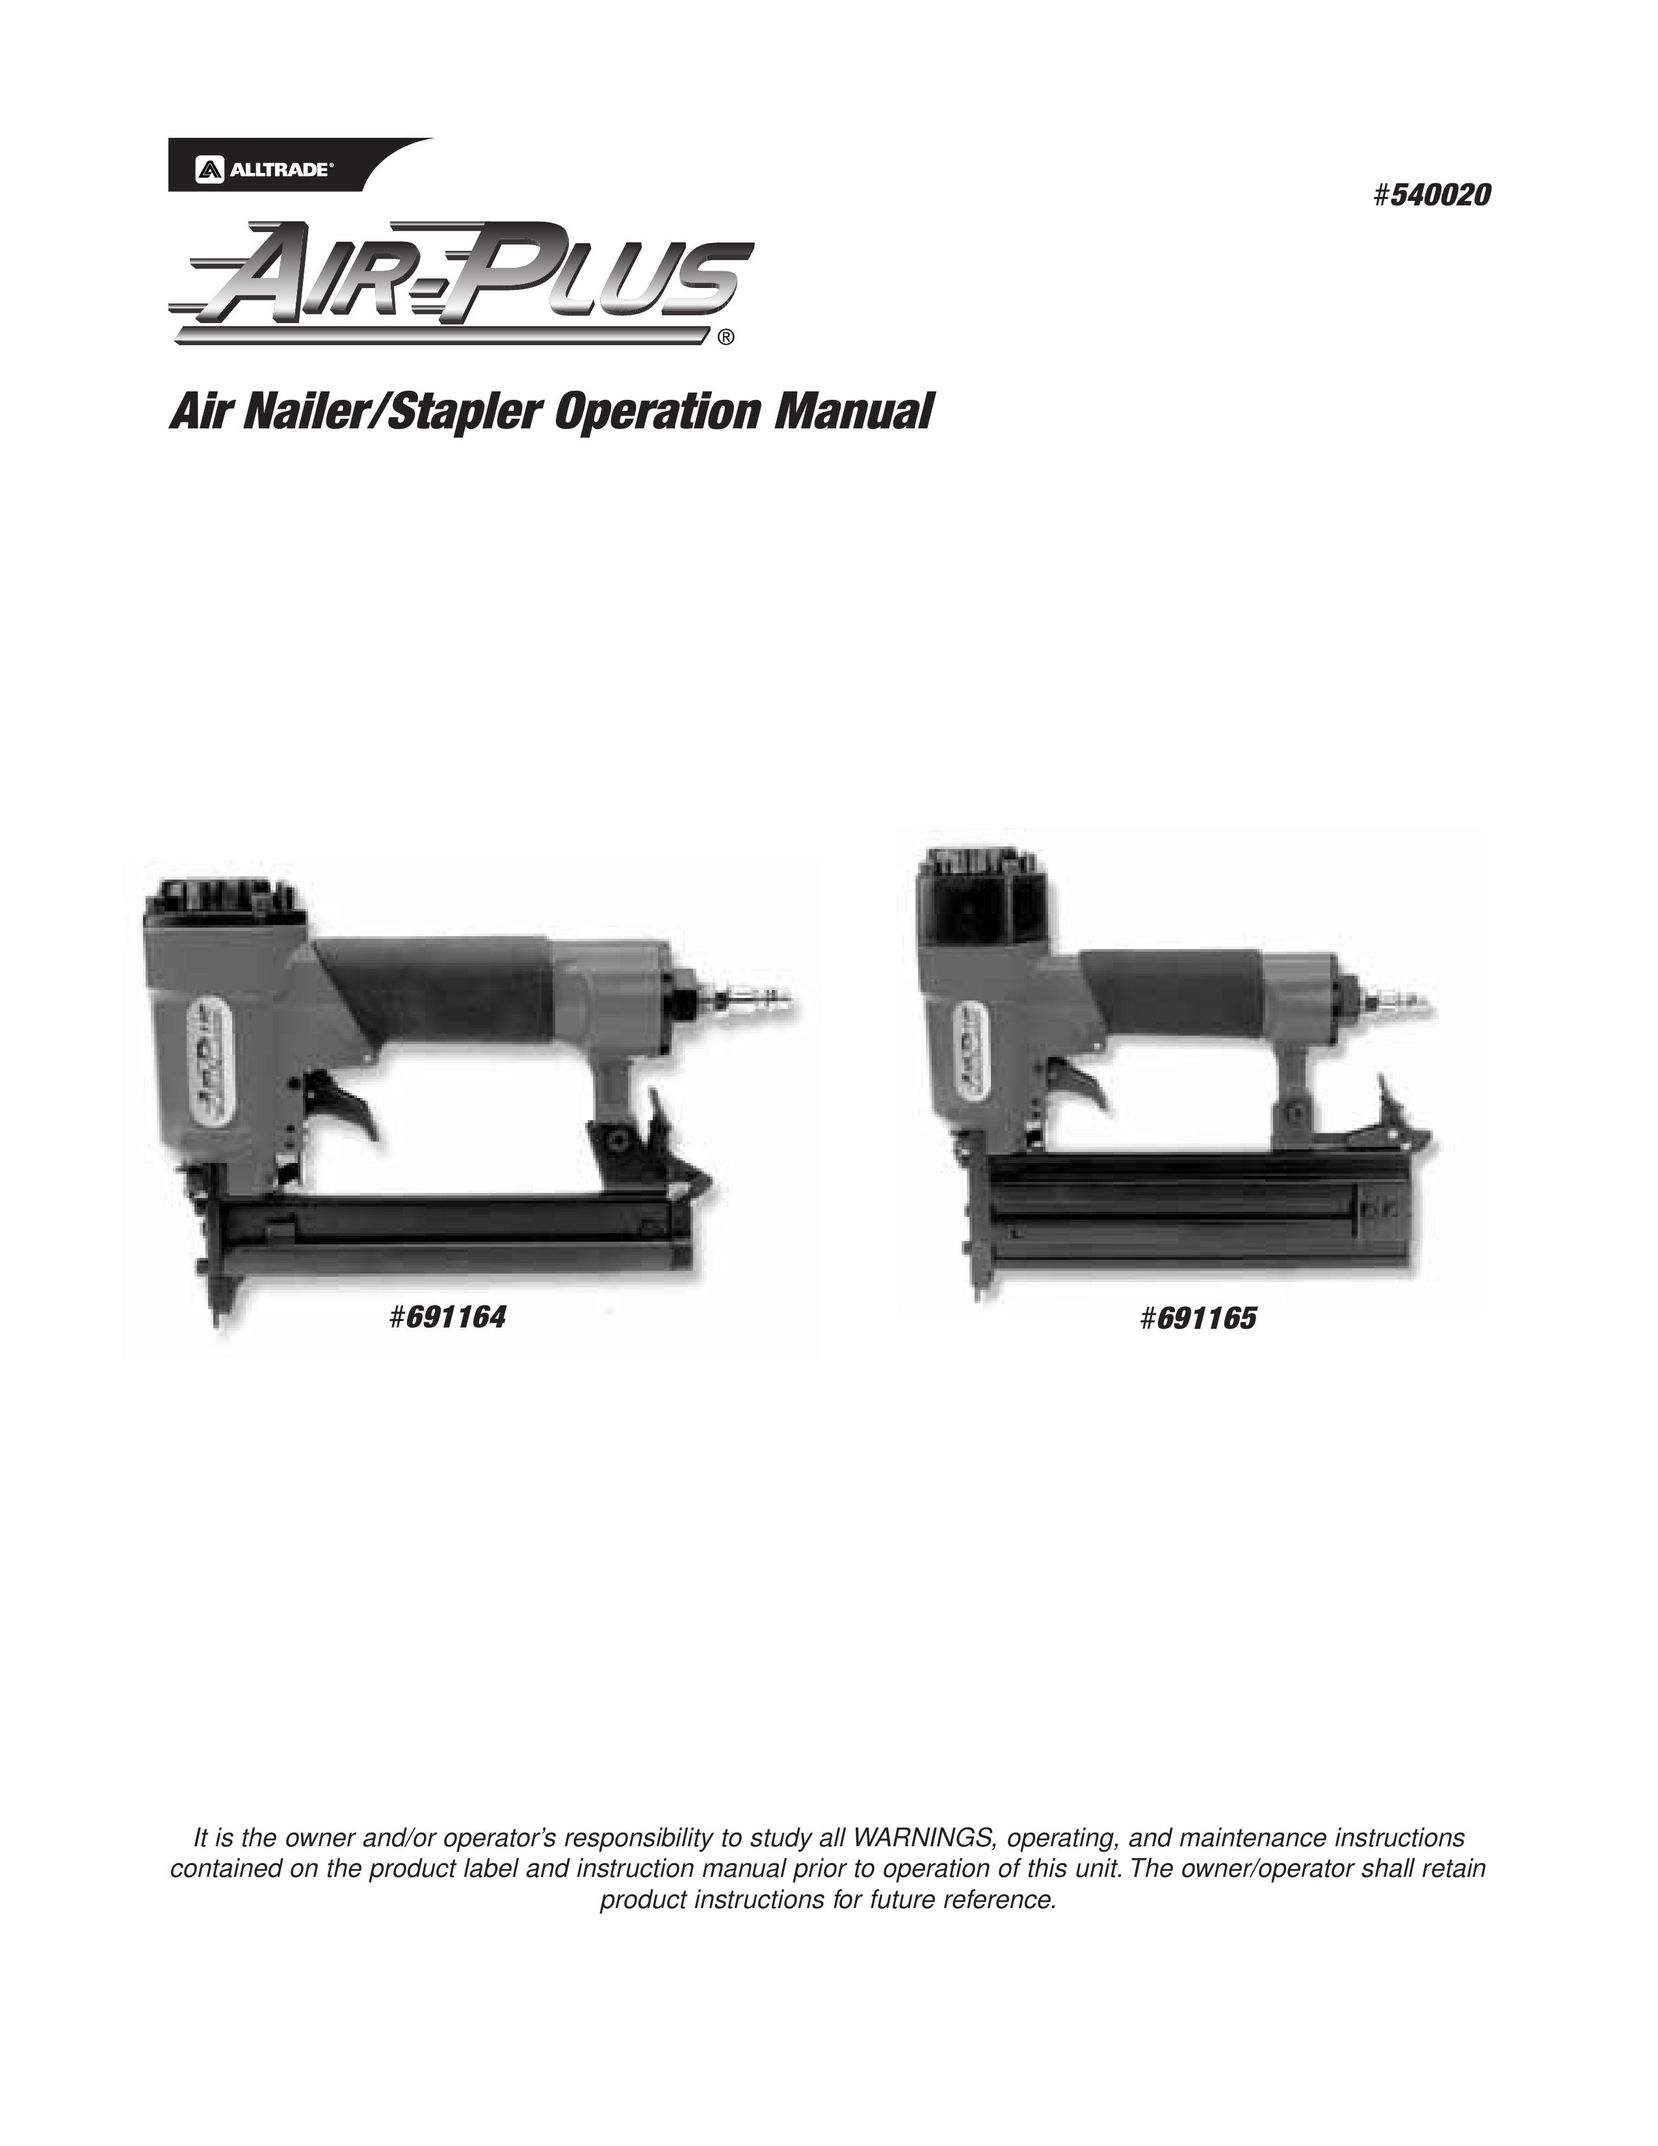 AllTrade 691165 Nail Gun User Manual